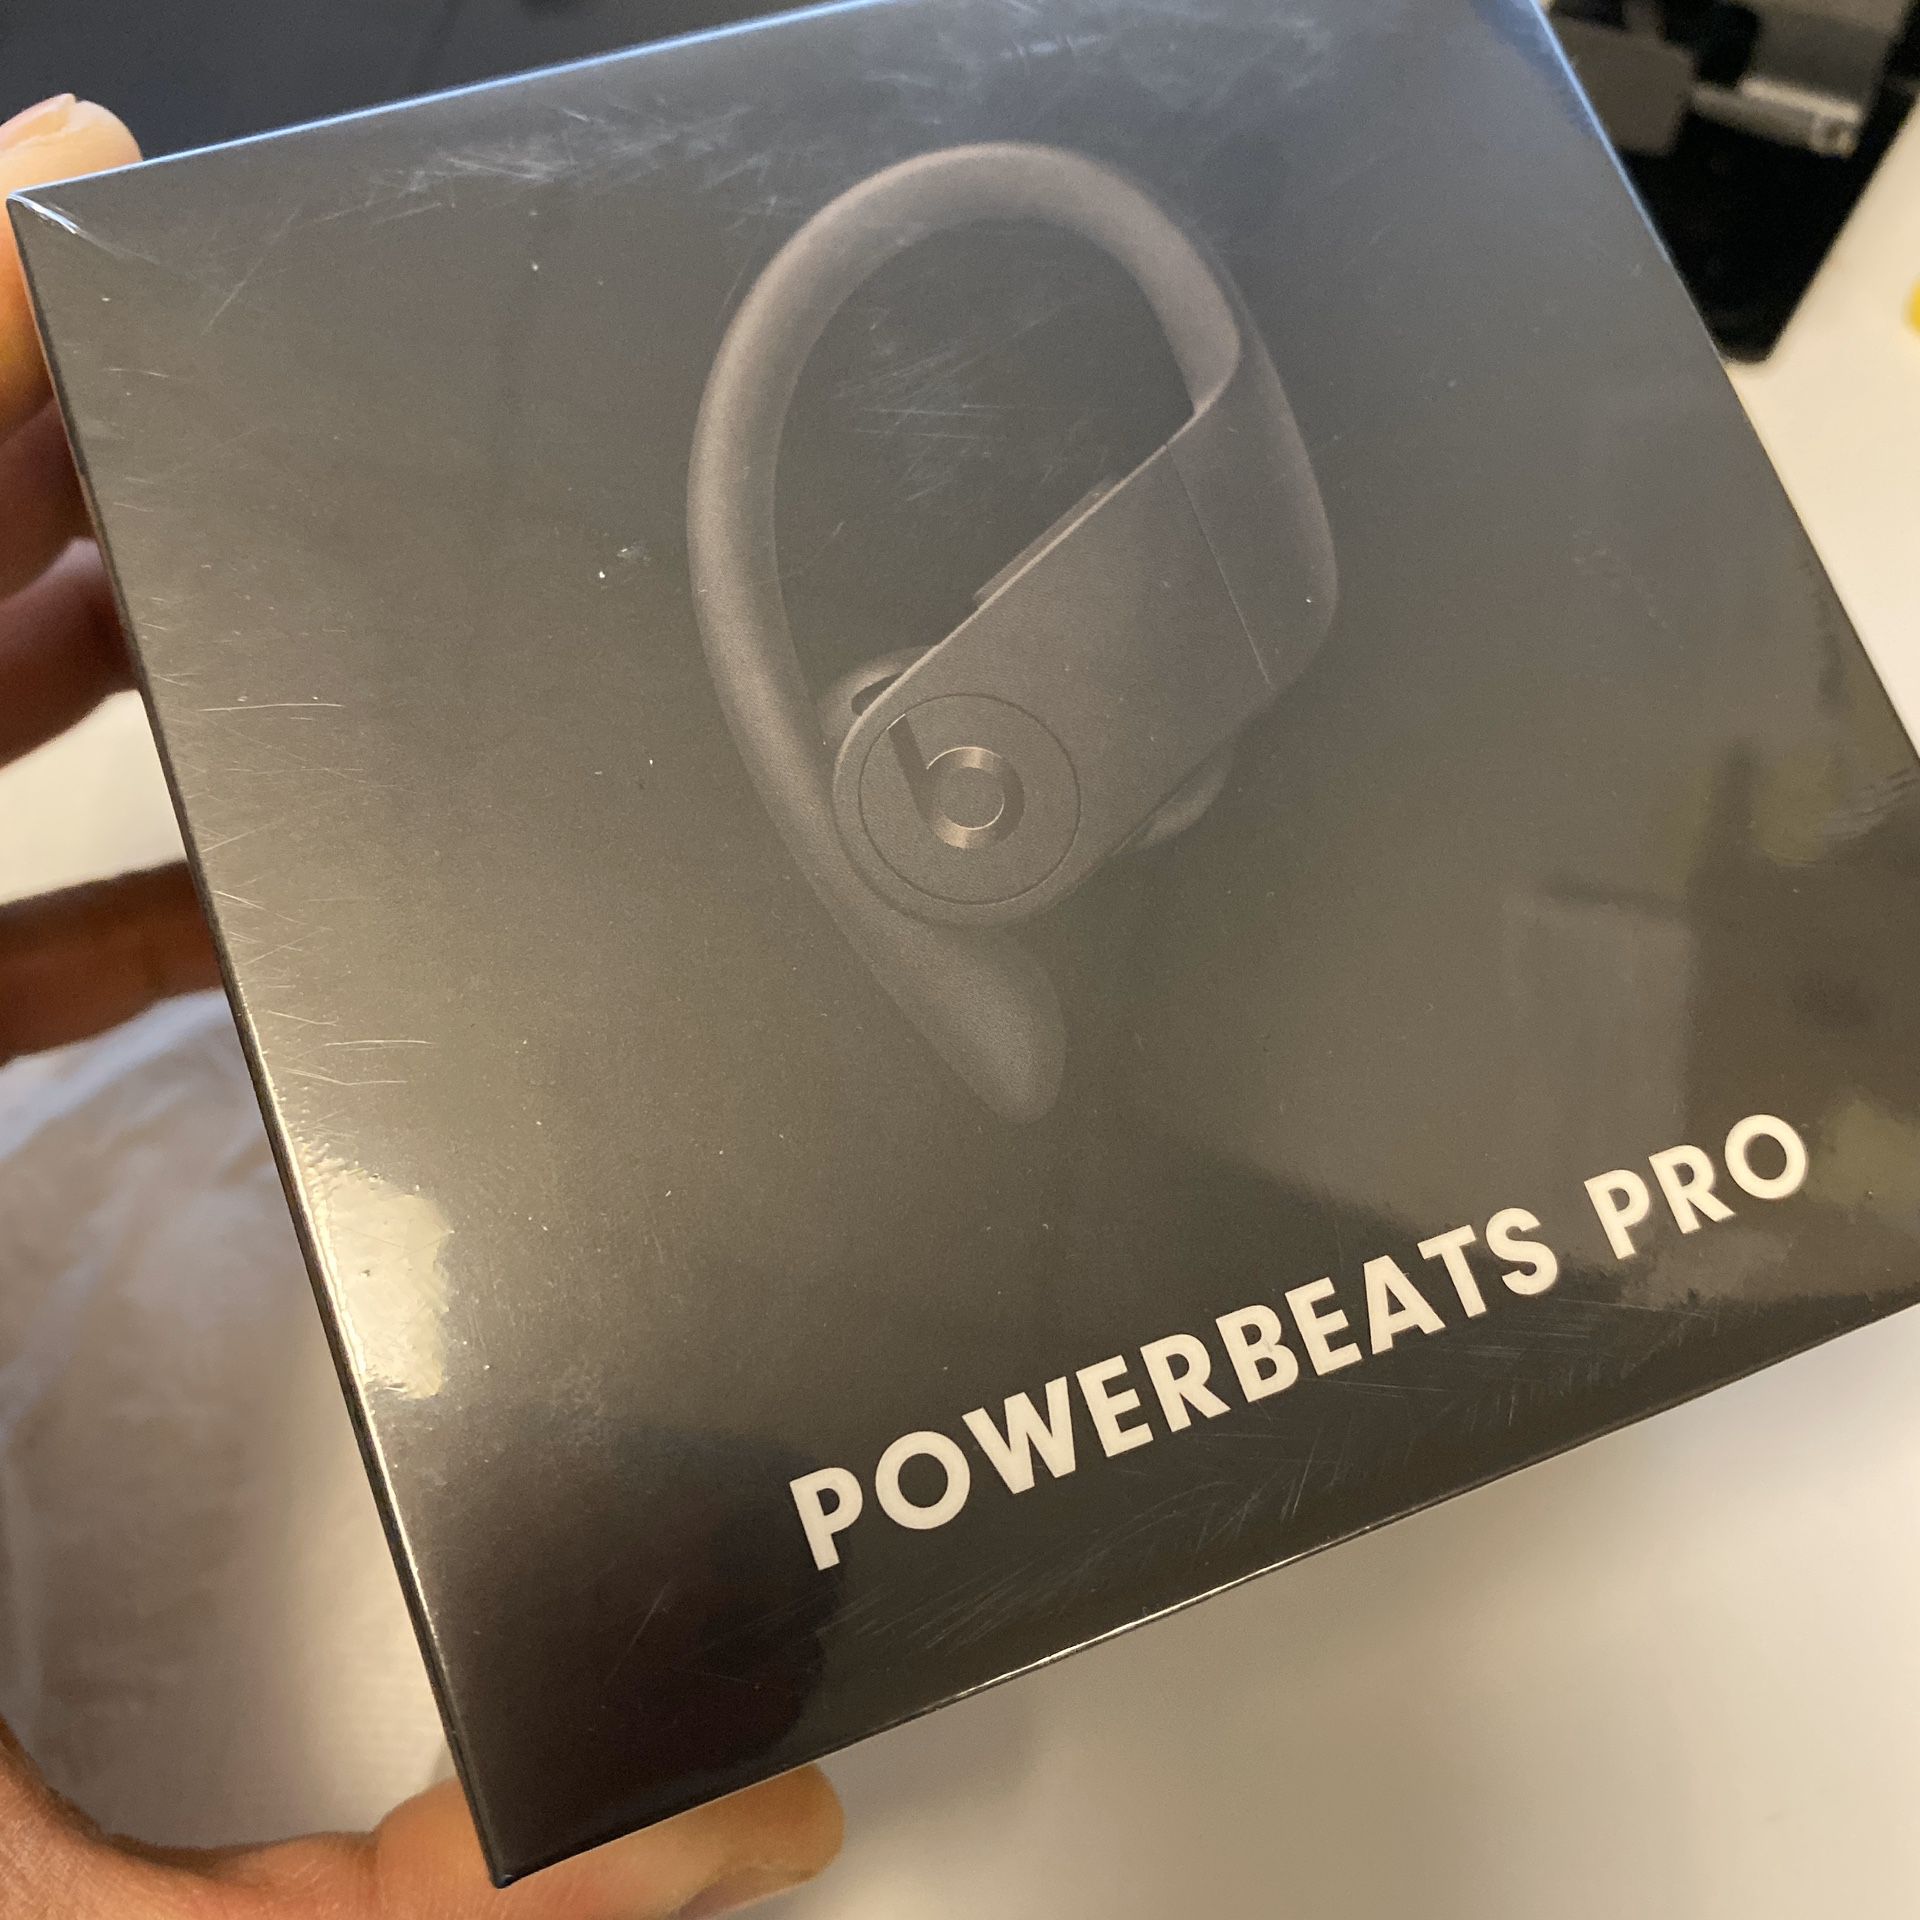 Apple Beats Powerbeats Pro